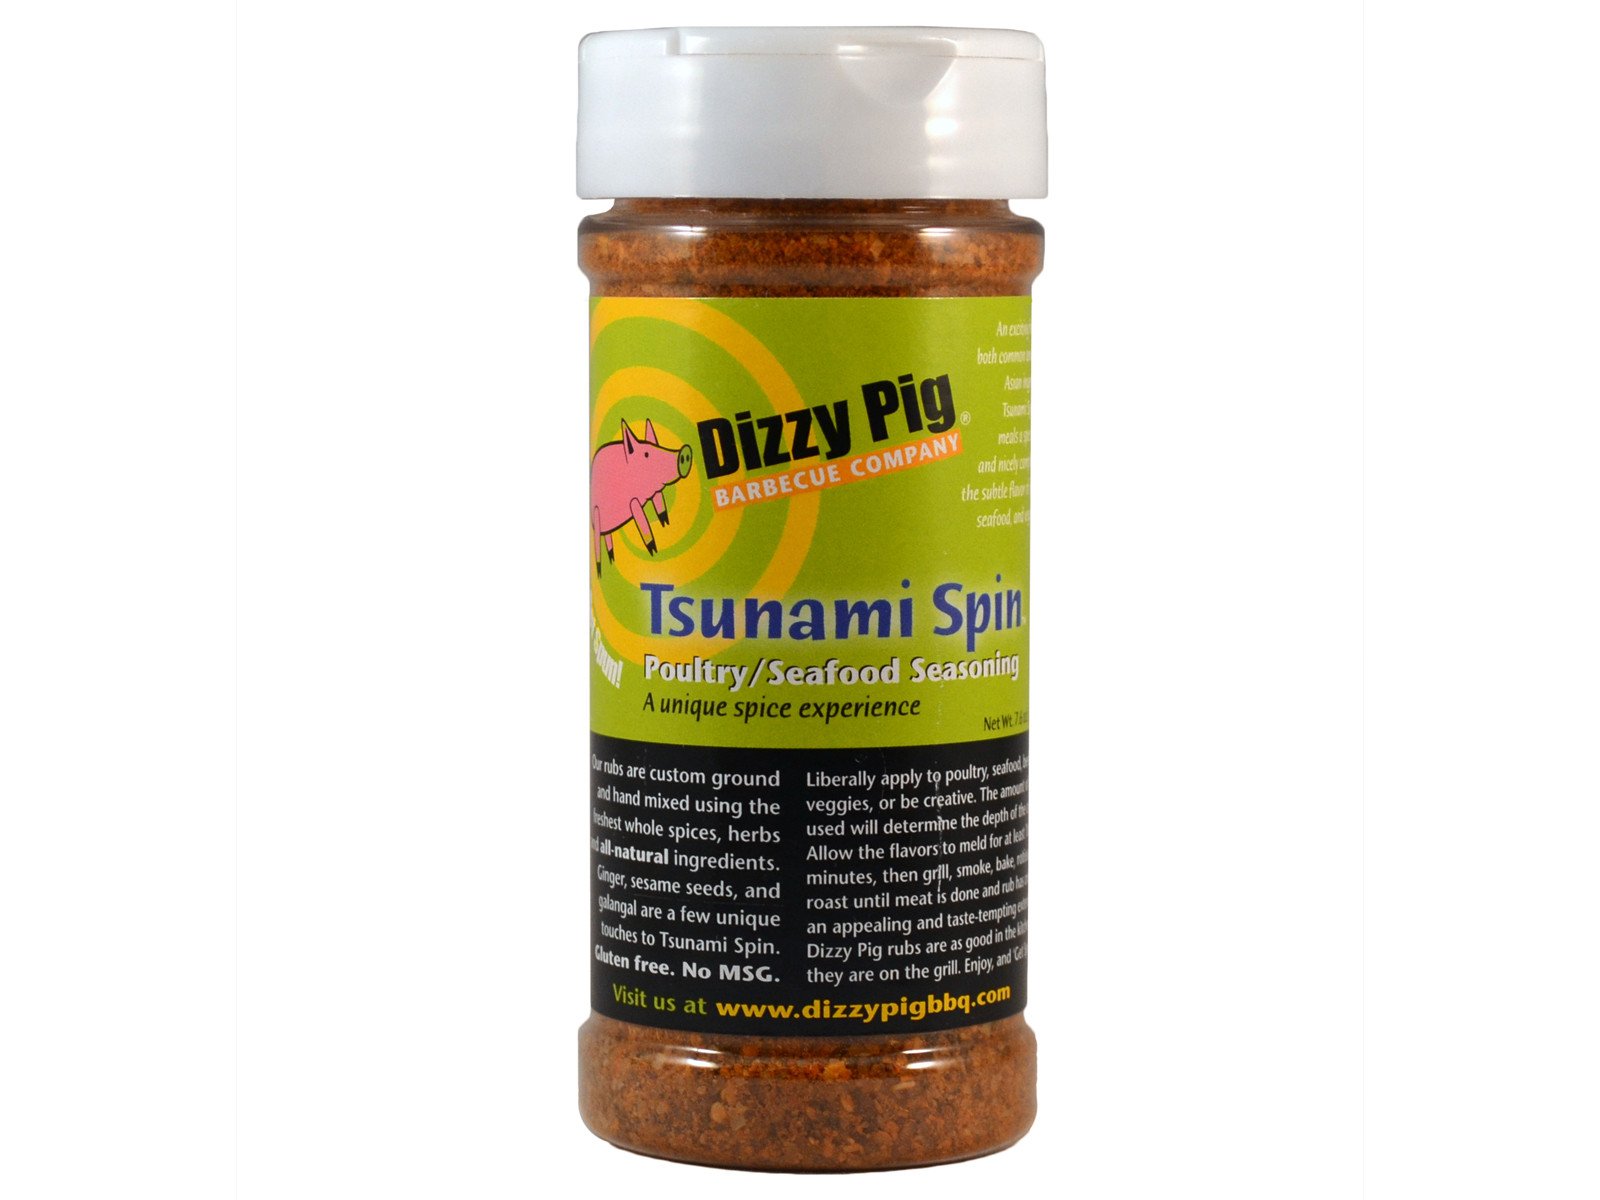 Dizzy Pig: Tsunami Spin